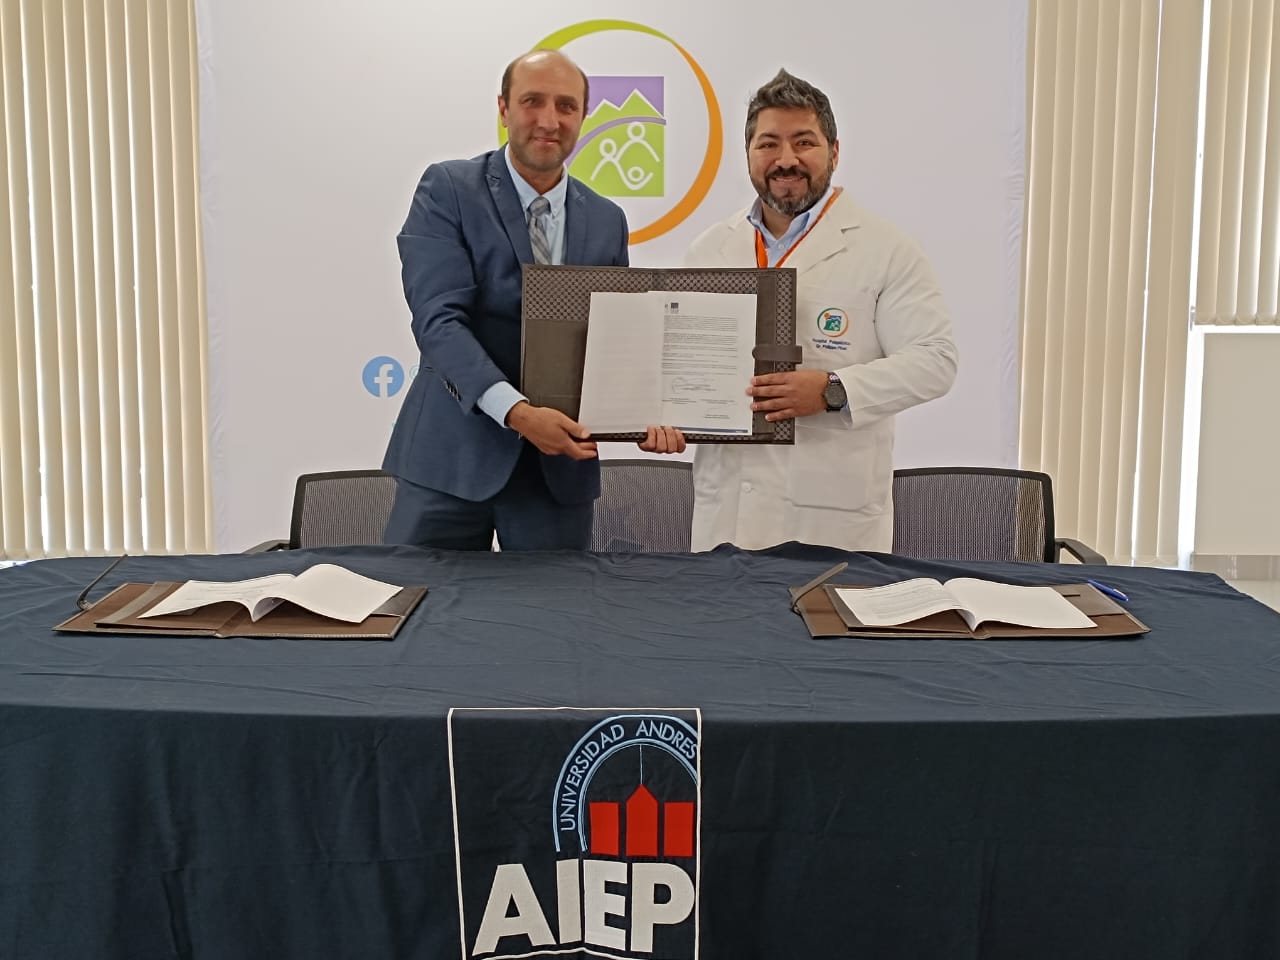 PUTAENDO: Hospital Psiquiátrico Dr. Philippe Pinel e Instituto Profesional AIEP firman convenio que facilitará la inclusión social de usuarios del establecimiento